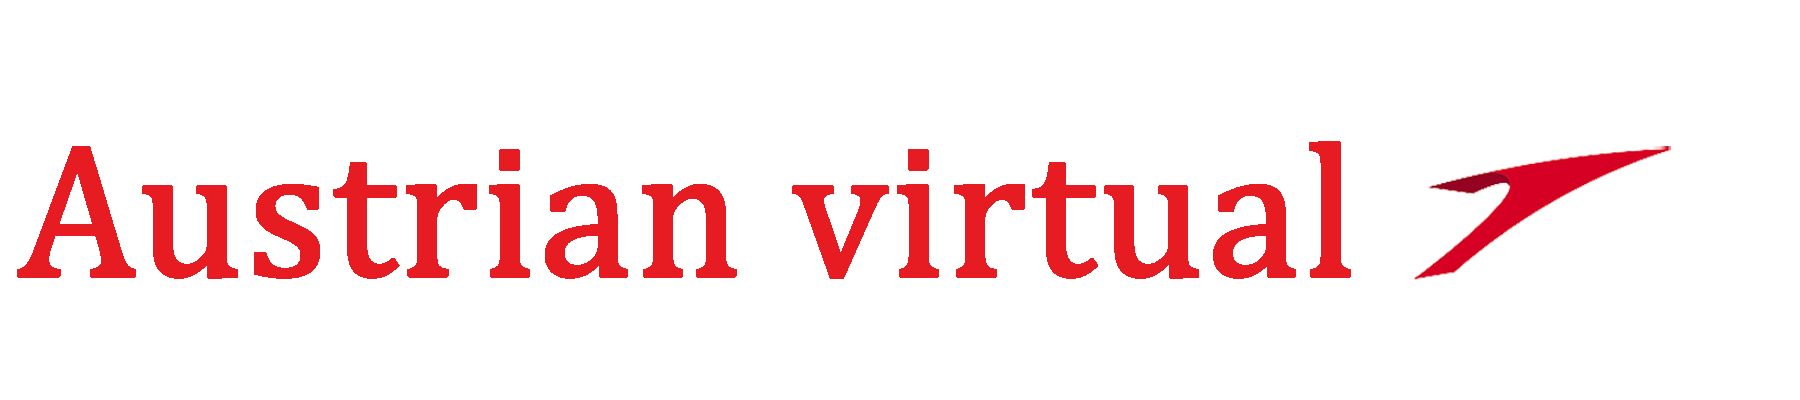 Austrian virtual community